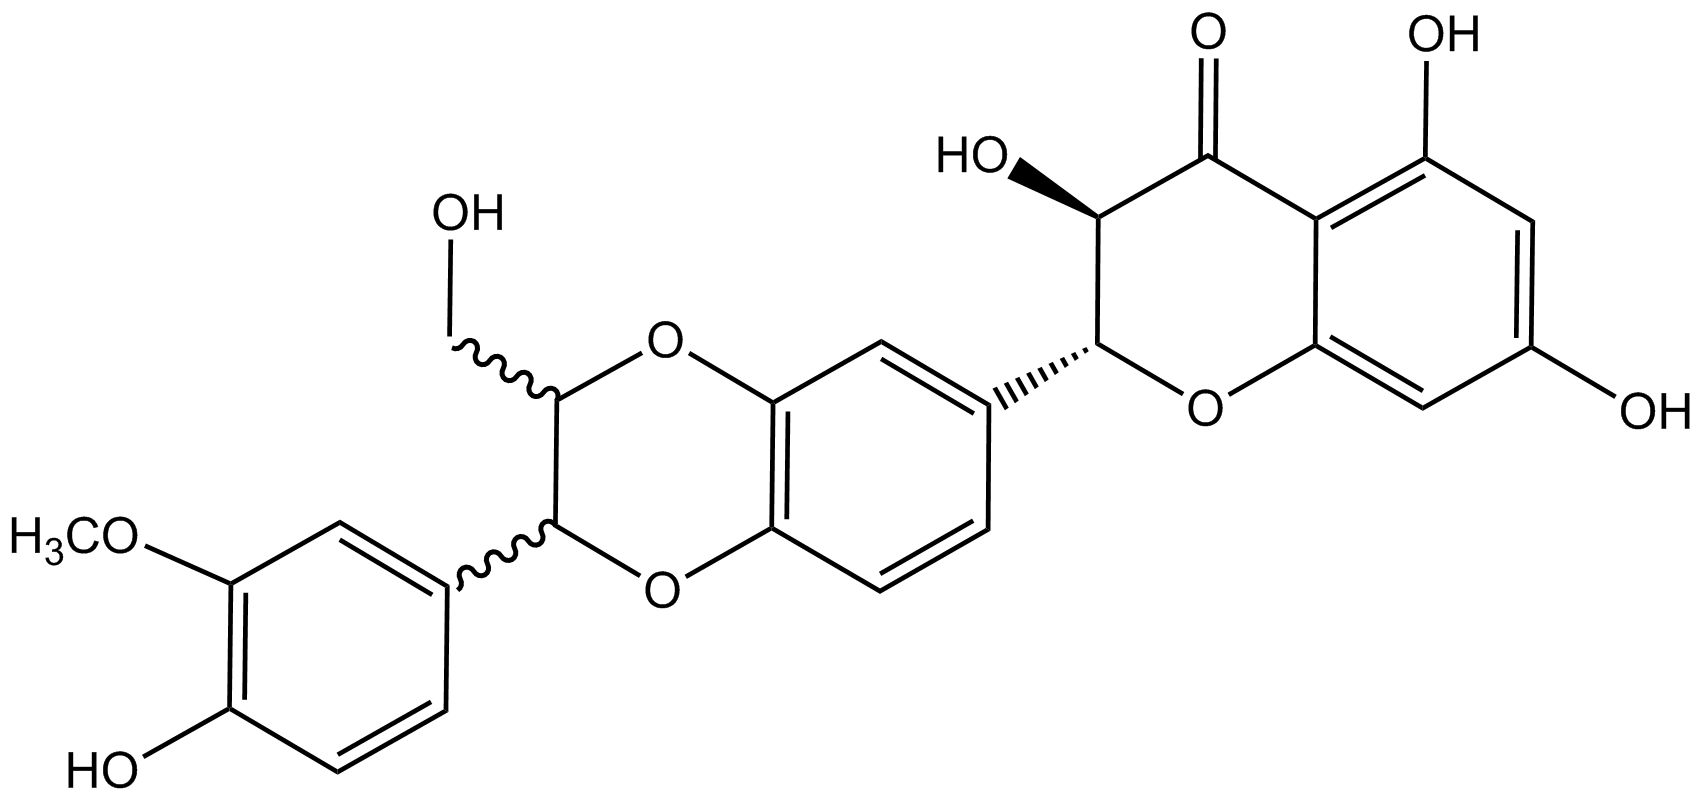 Isosilibinin (A + B Gemisch) phyproof® Referenzsubstanz | PhytoLab